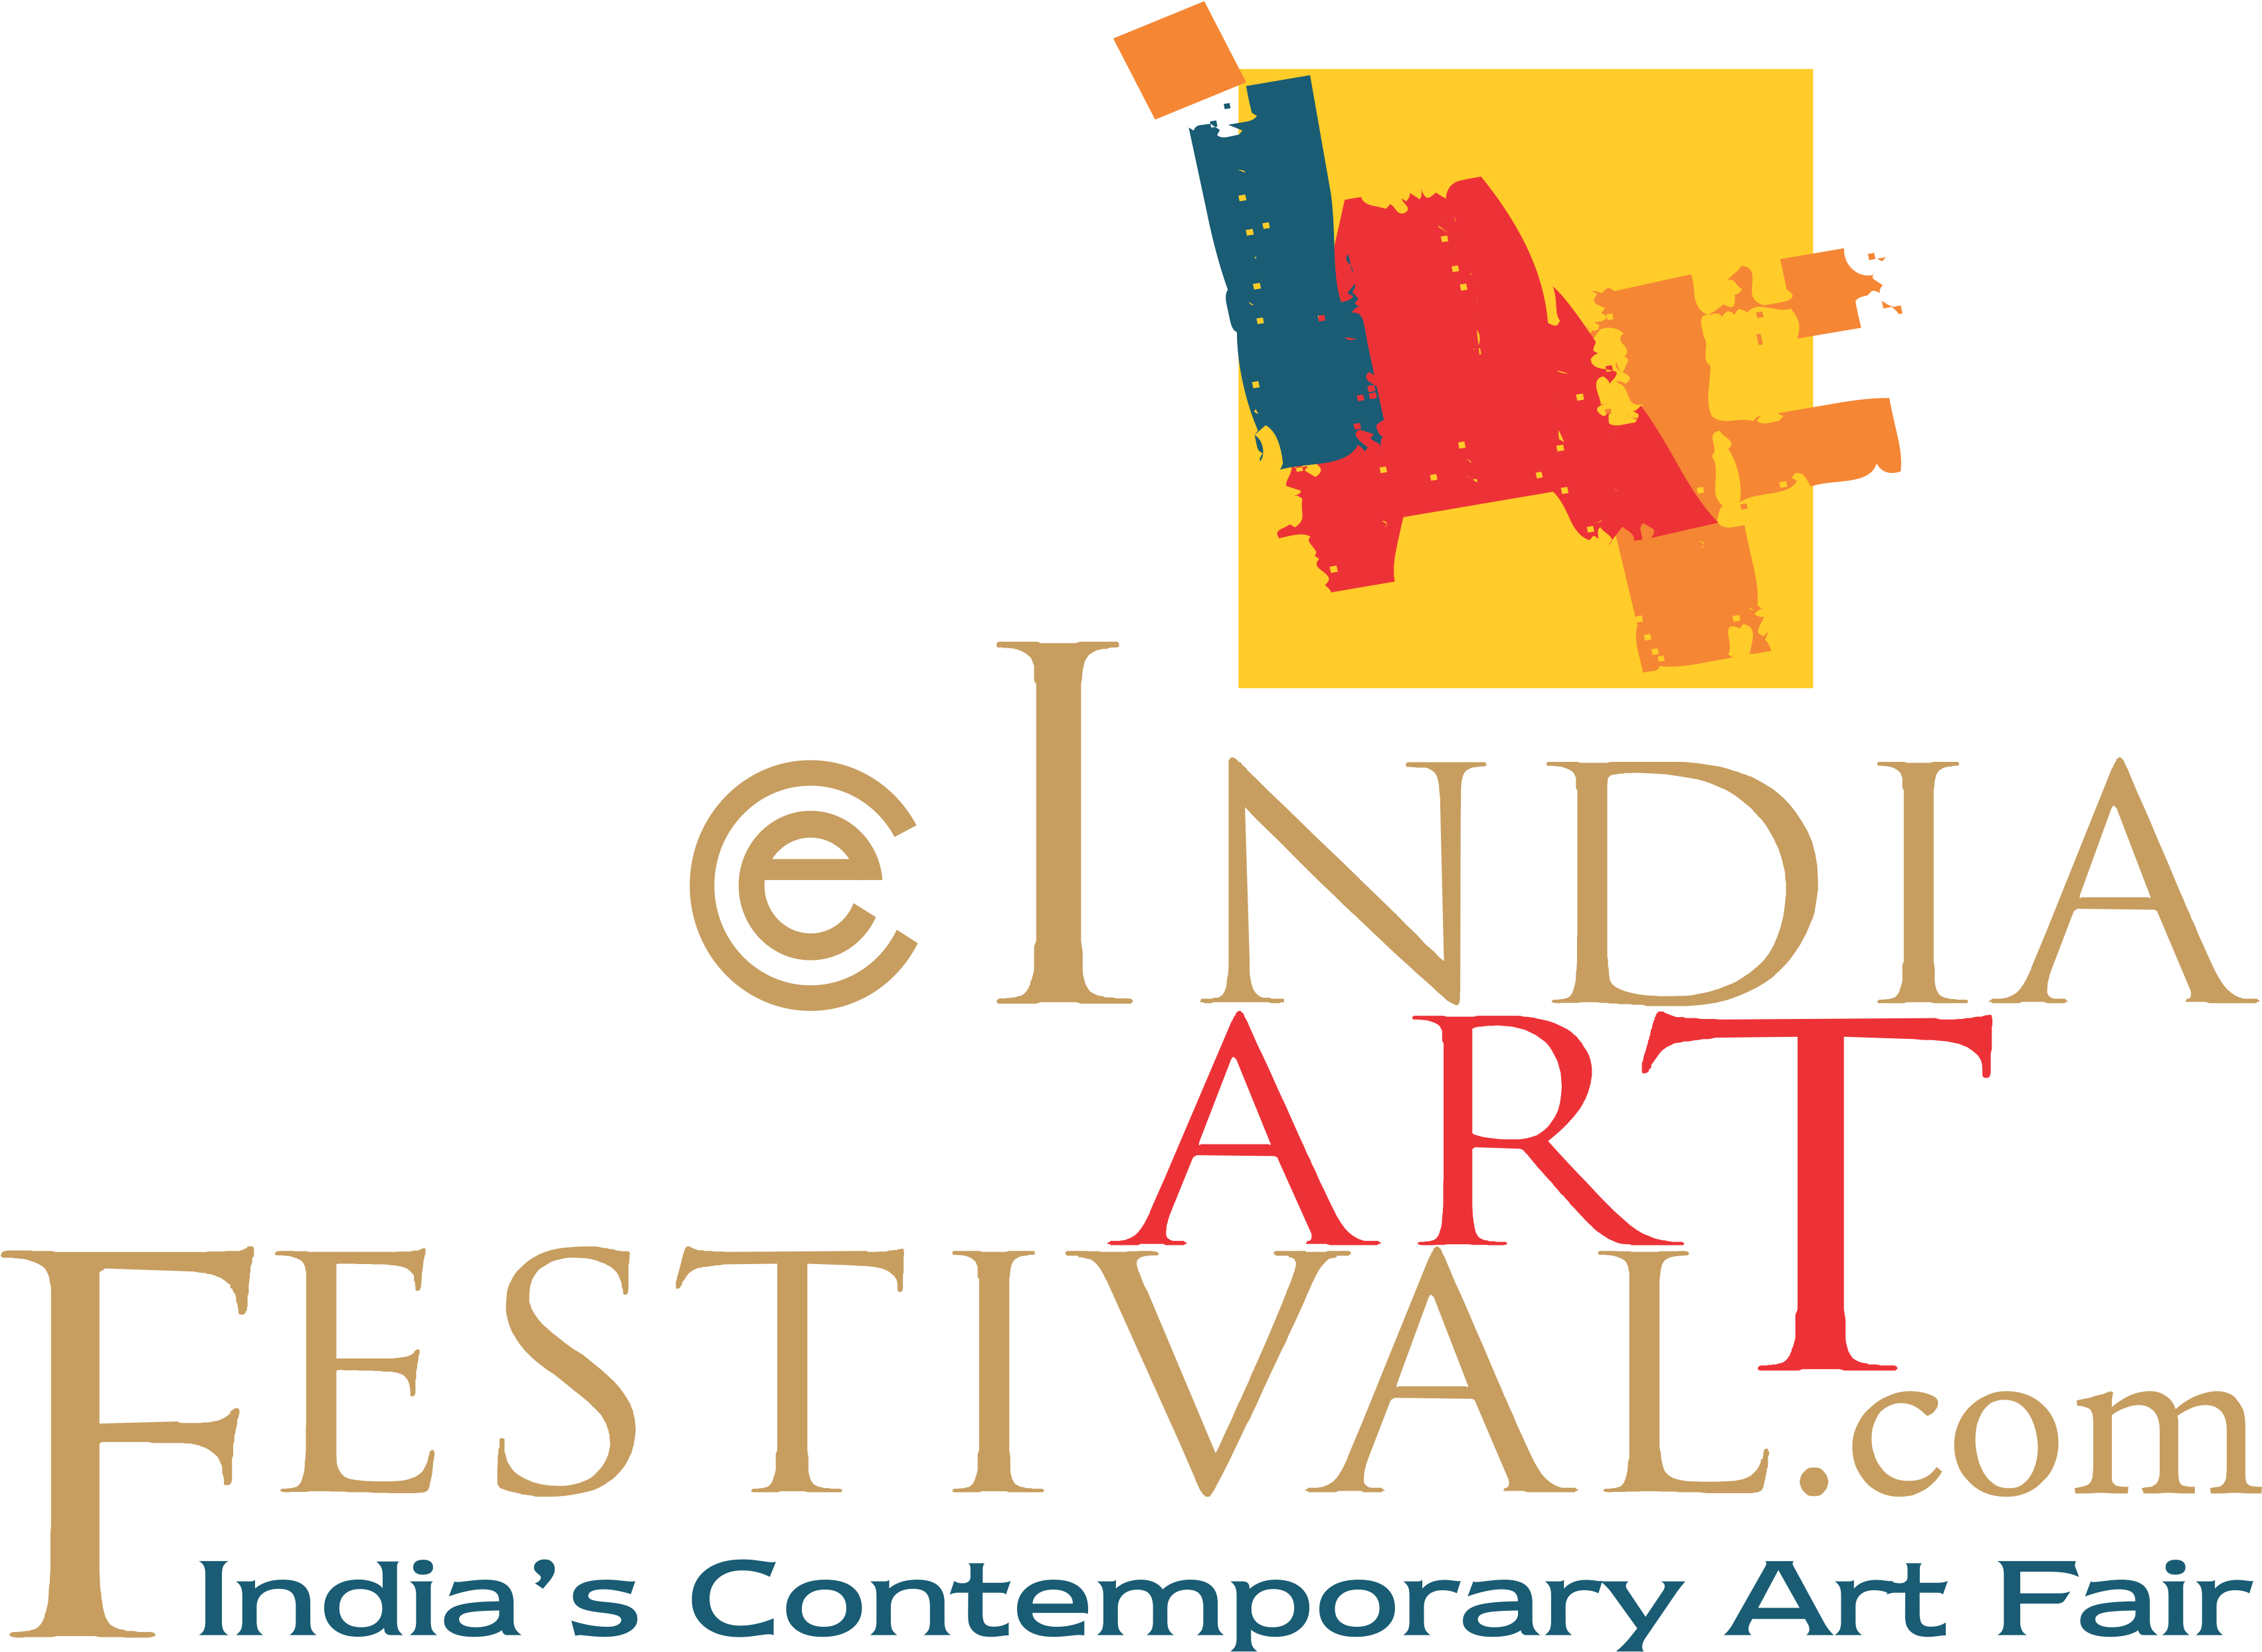 E India Art Festival - Indian Art Festival 2017 (3538x2650)